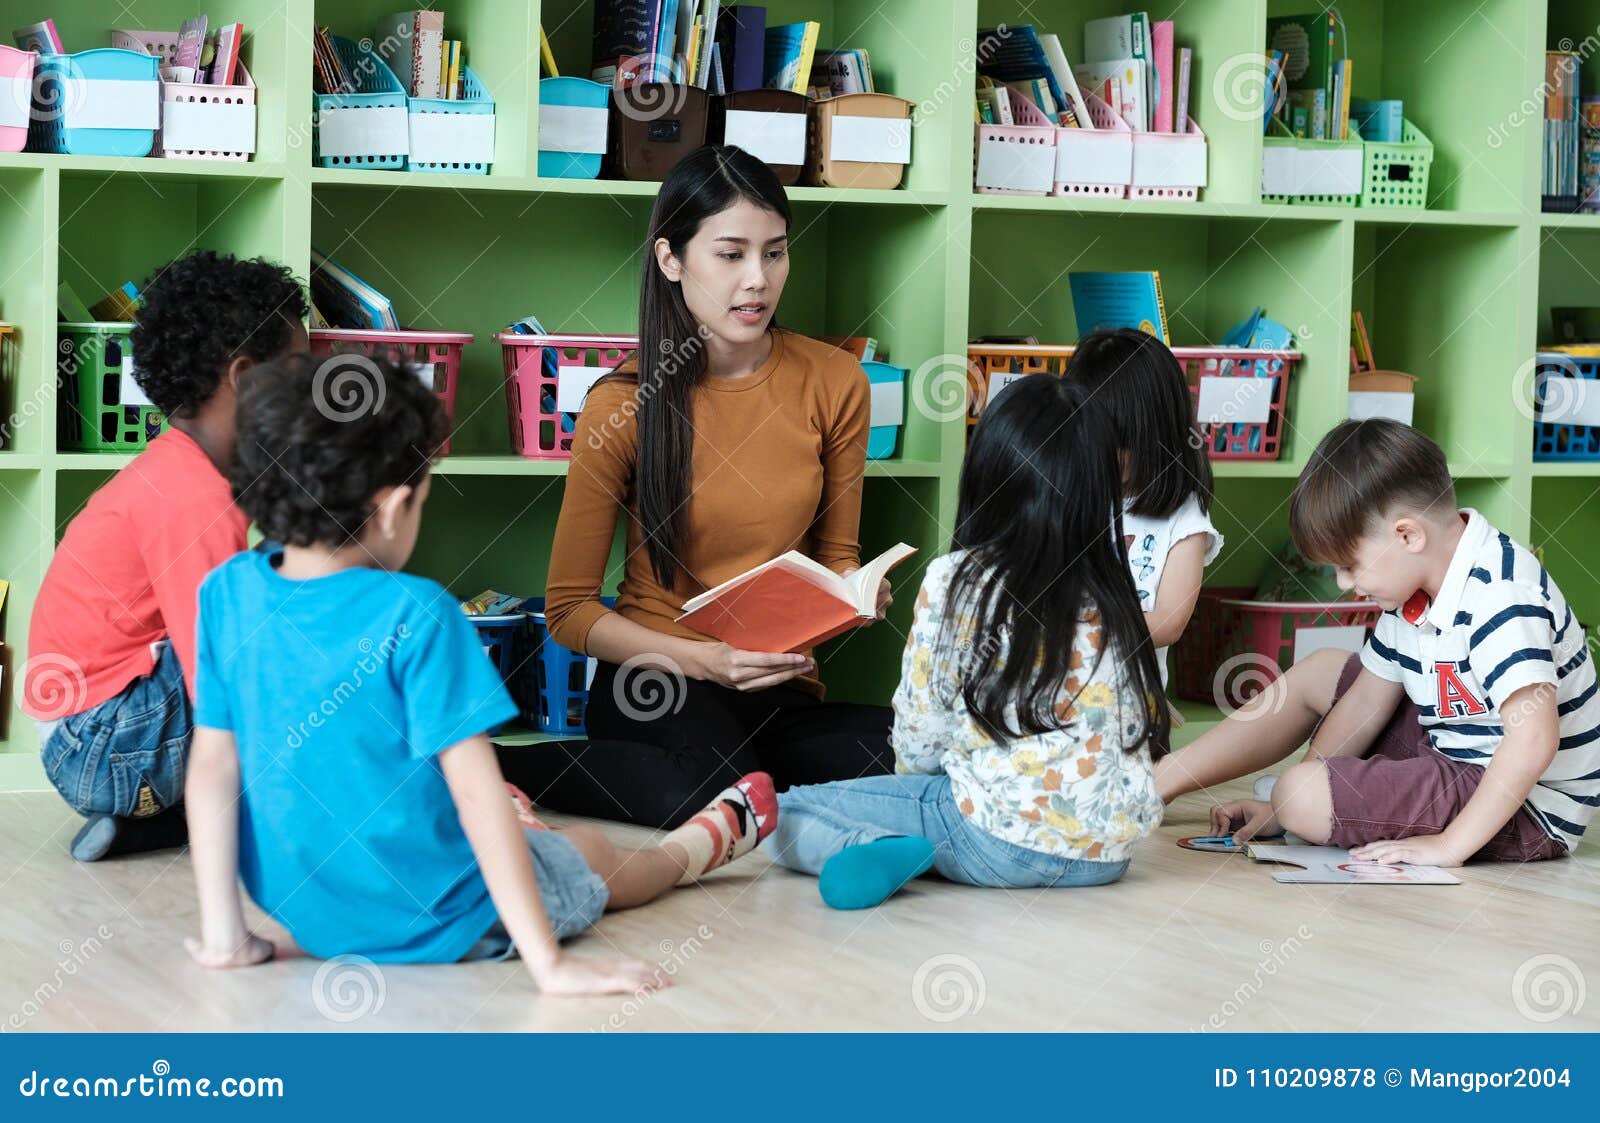 young asian woman teacher teaching kids in kindergarten classroom, preschool education concept